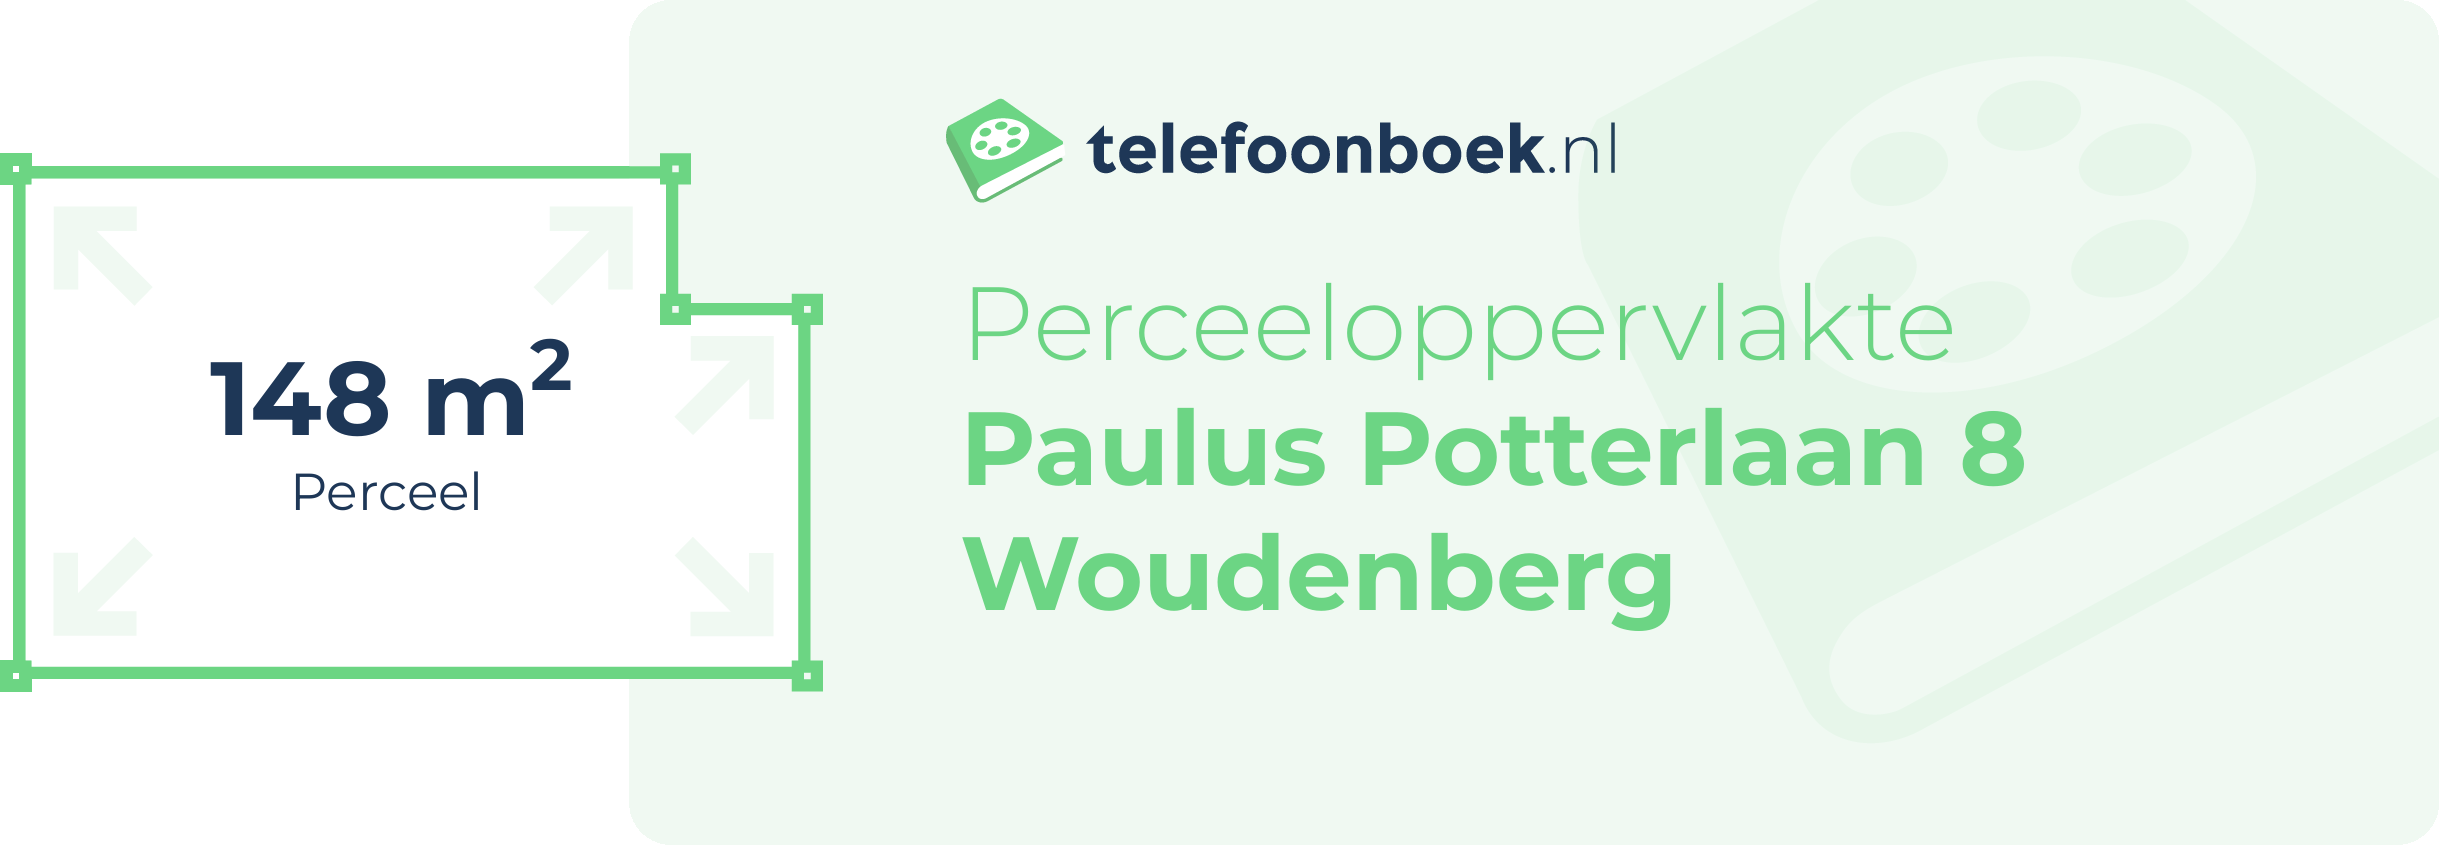 Perceeloppervlakte Paulus Potterlaan 8 Woudenberg